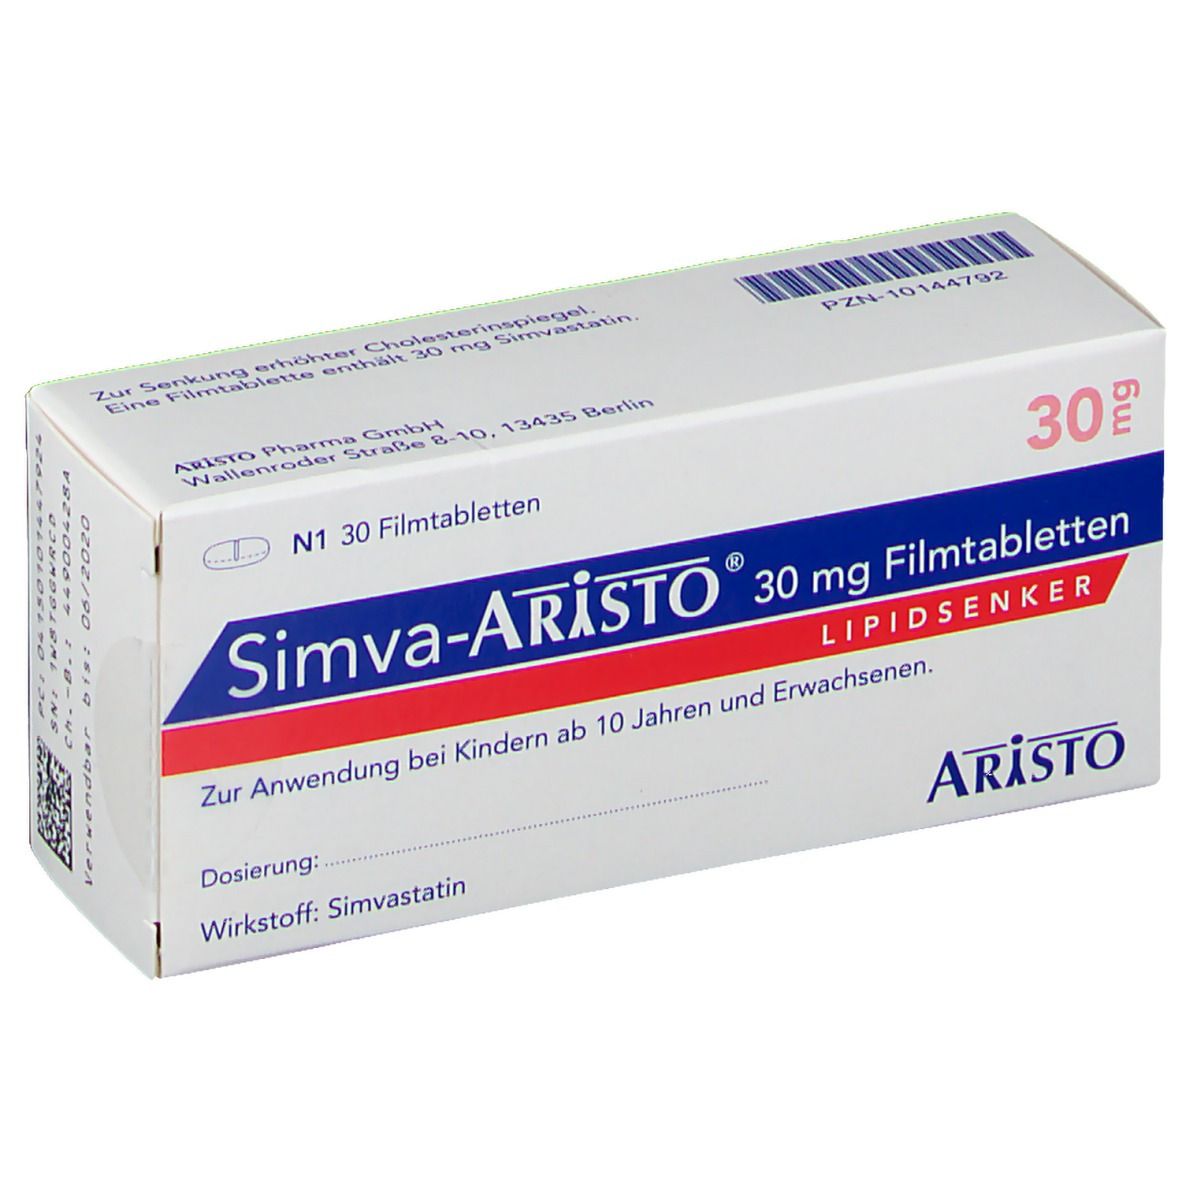 Simva-Aristo® 30 mg